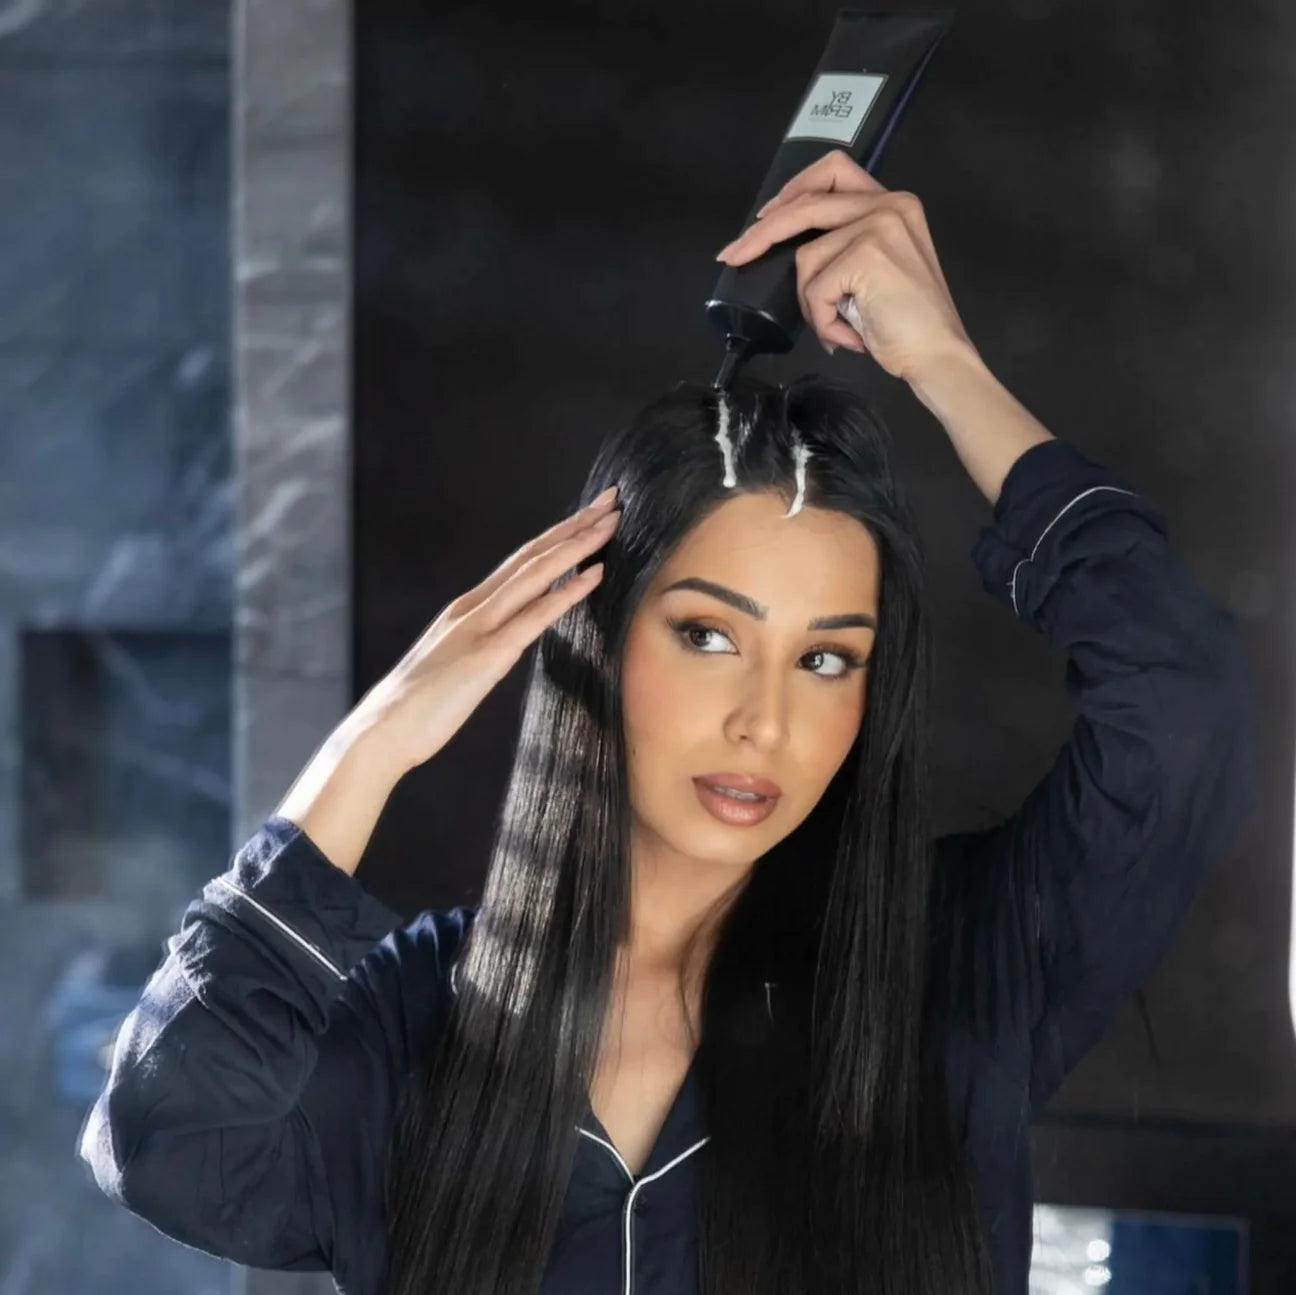 ByErim Scalp Scrub - Image of Model Using Product in hair